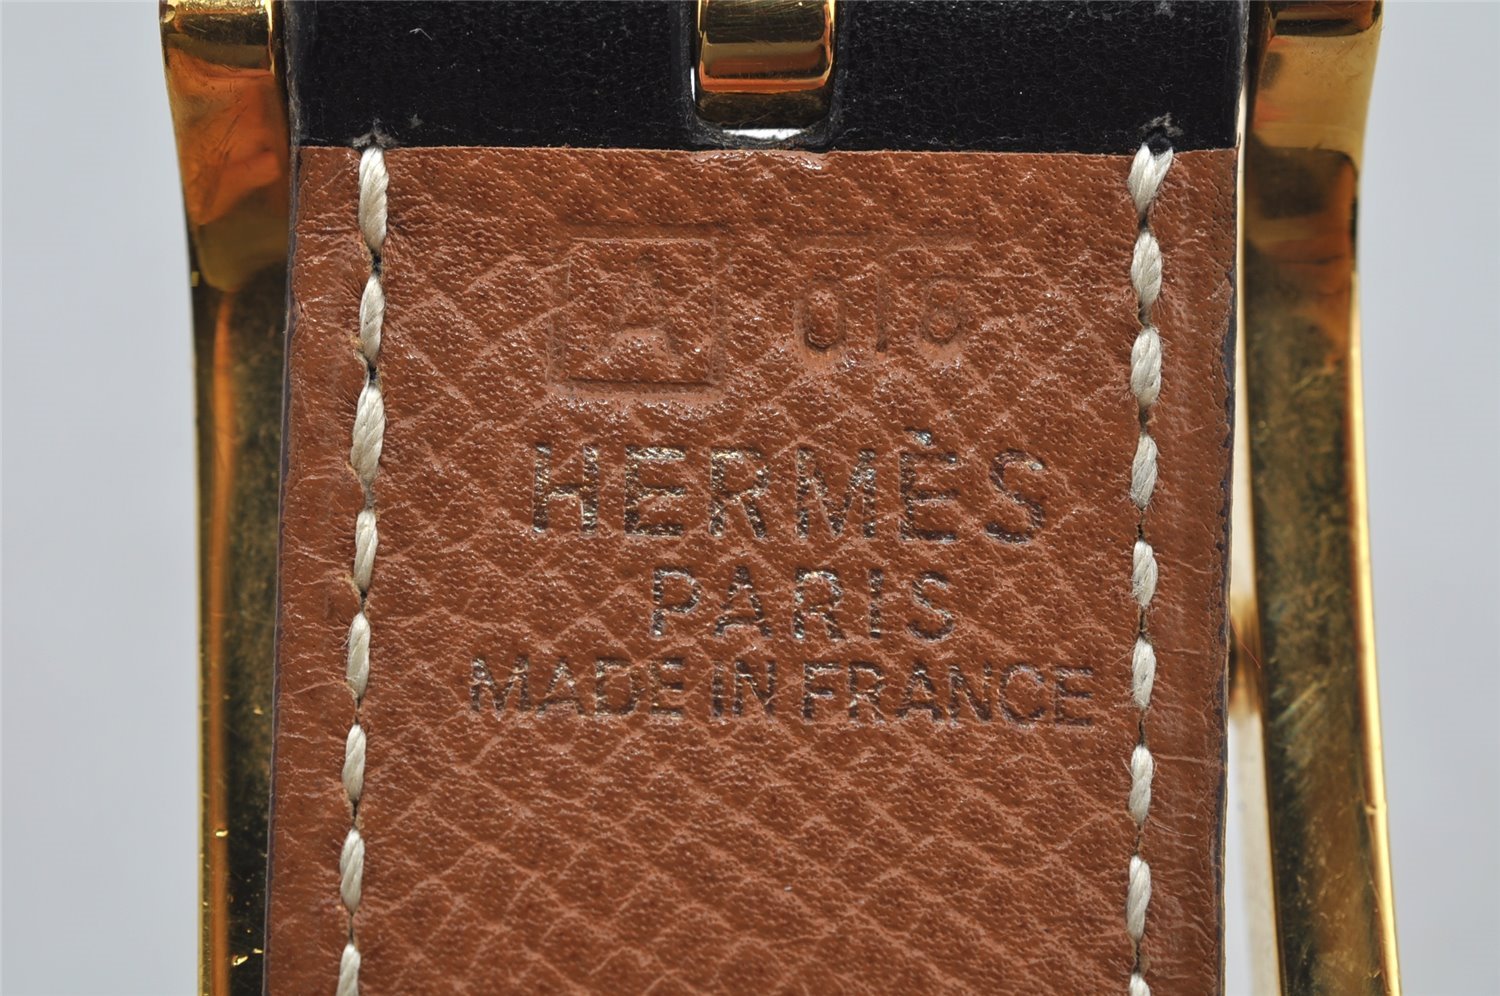 Authentic HERMES Api 3 Leather Reversible Belt Size 65cm 25.6